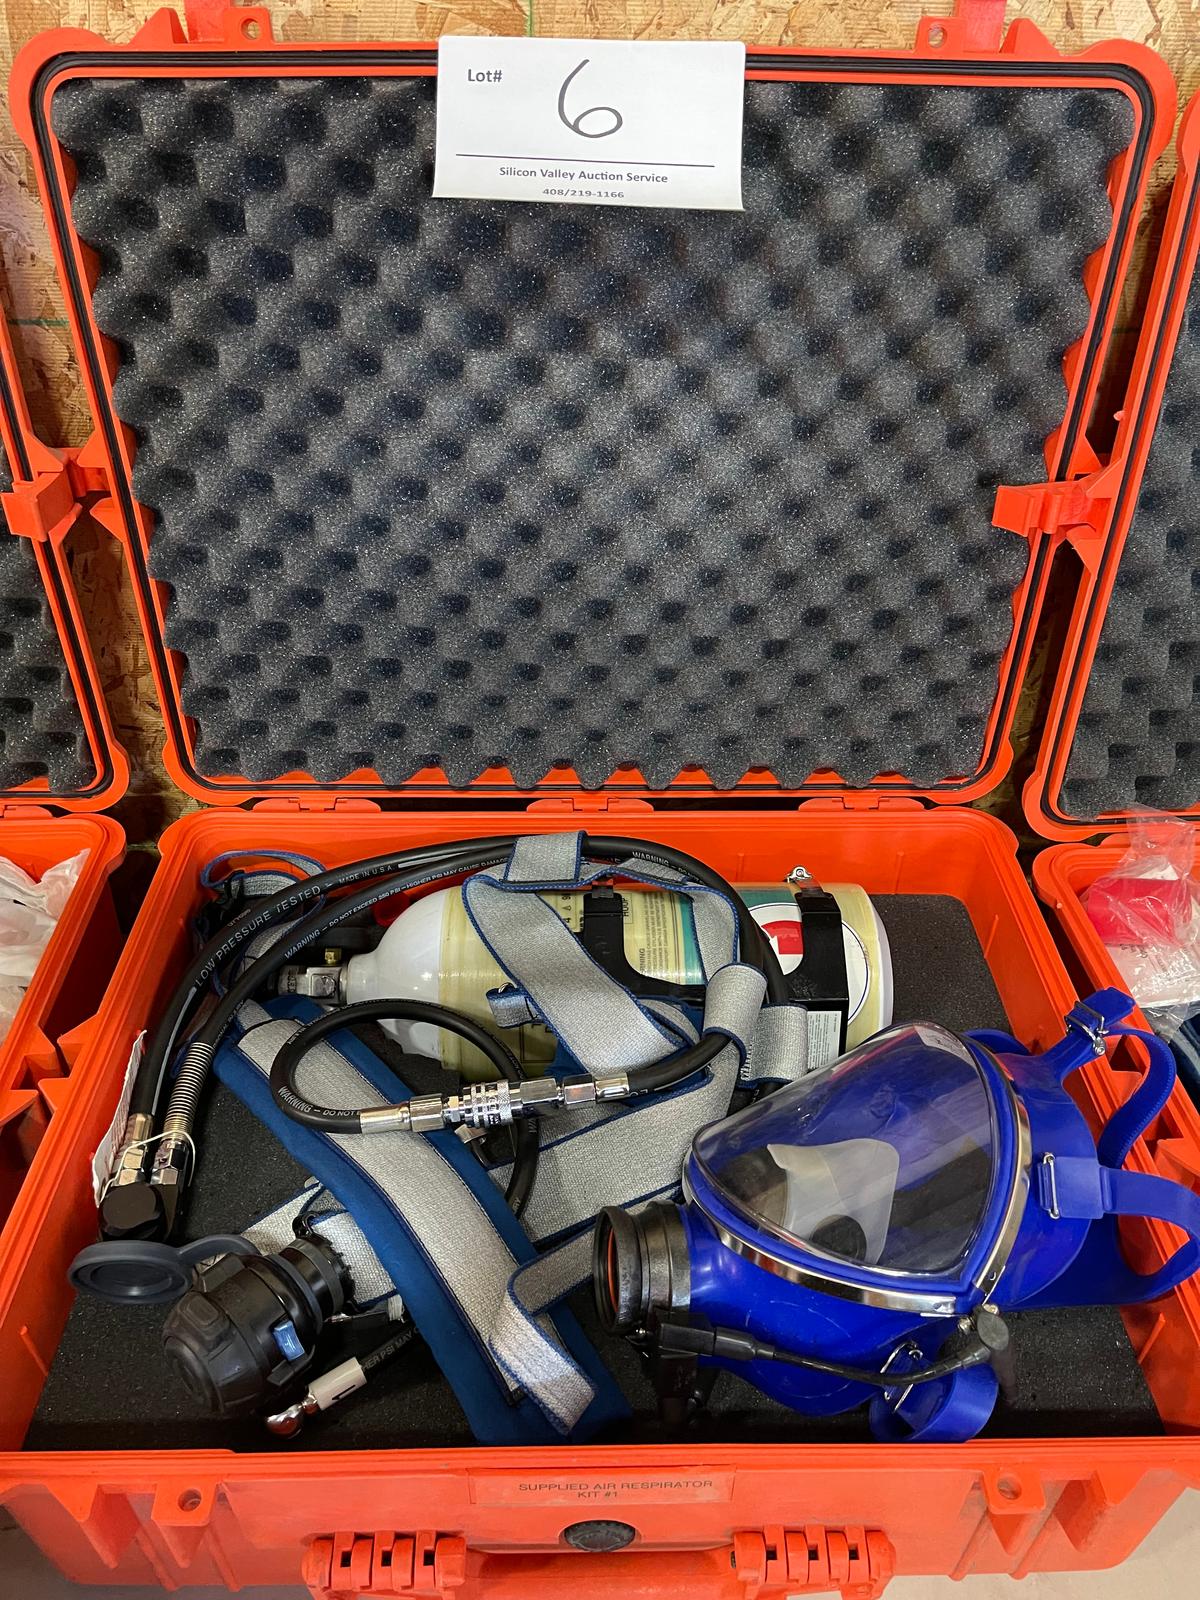 Supplied Air Respirator kit